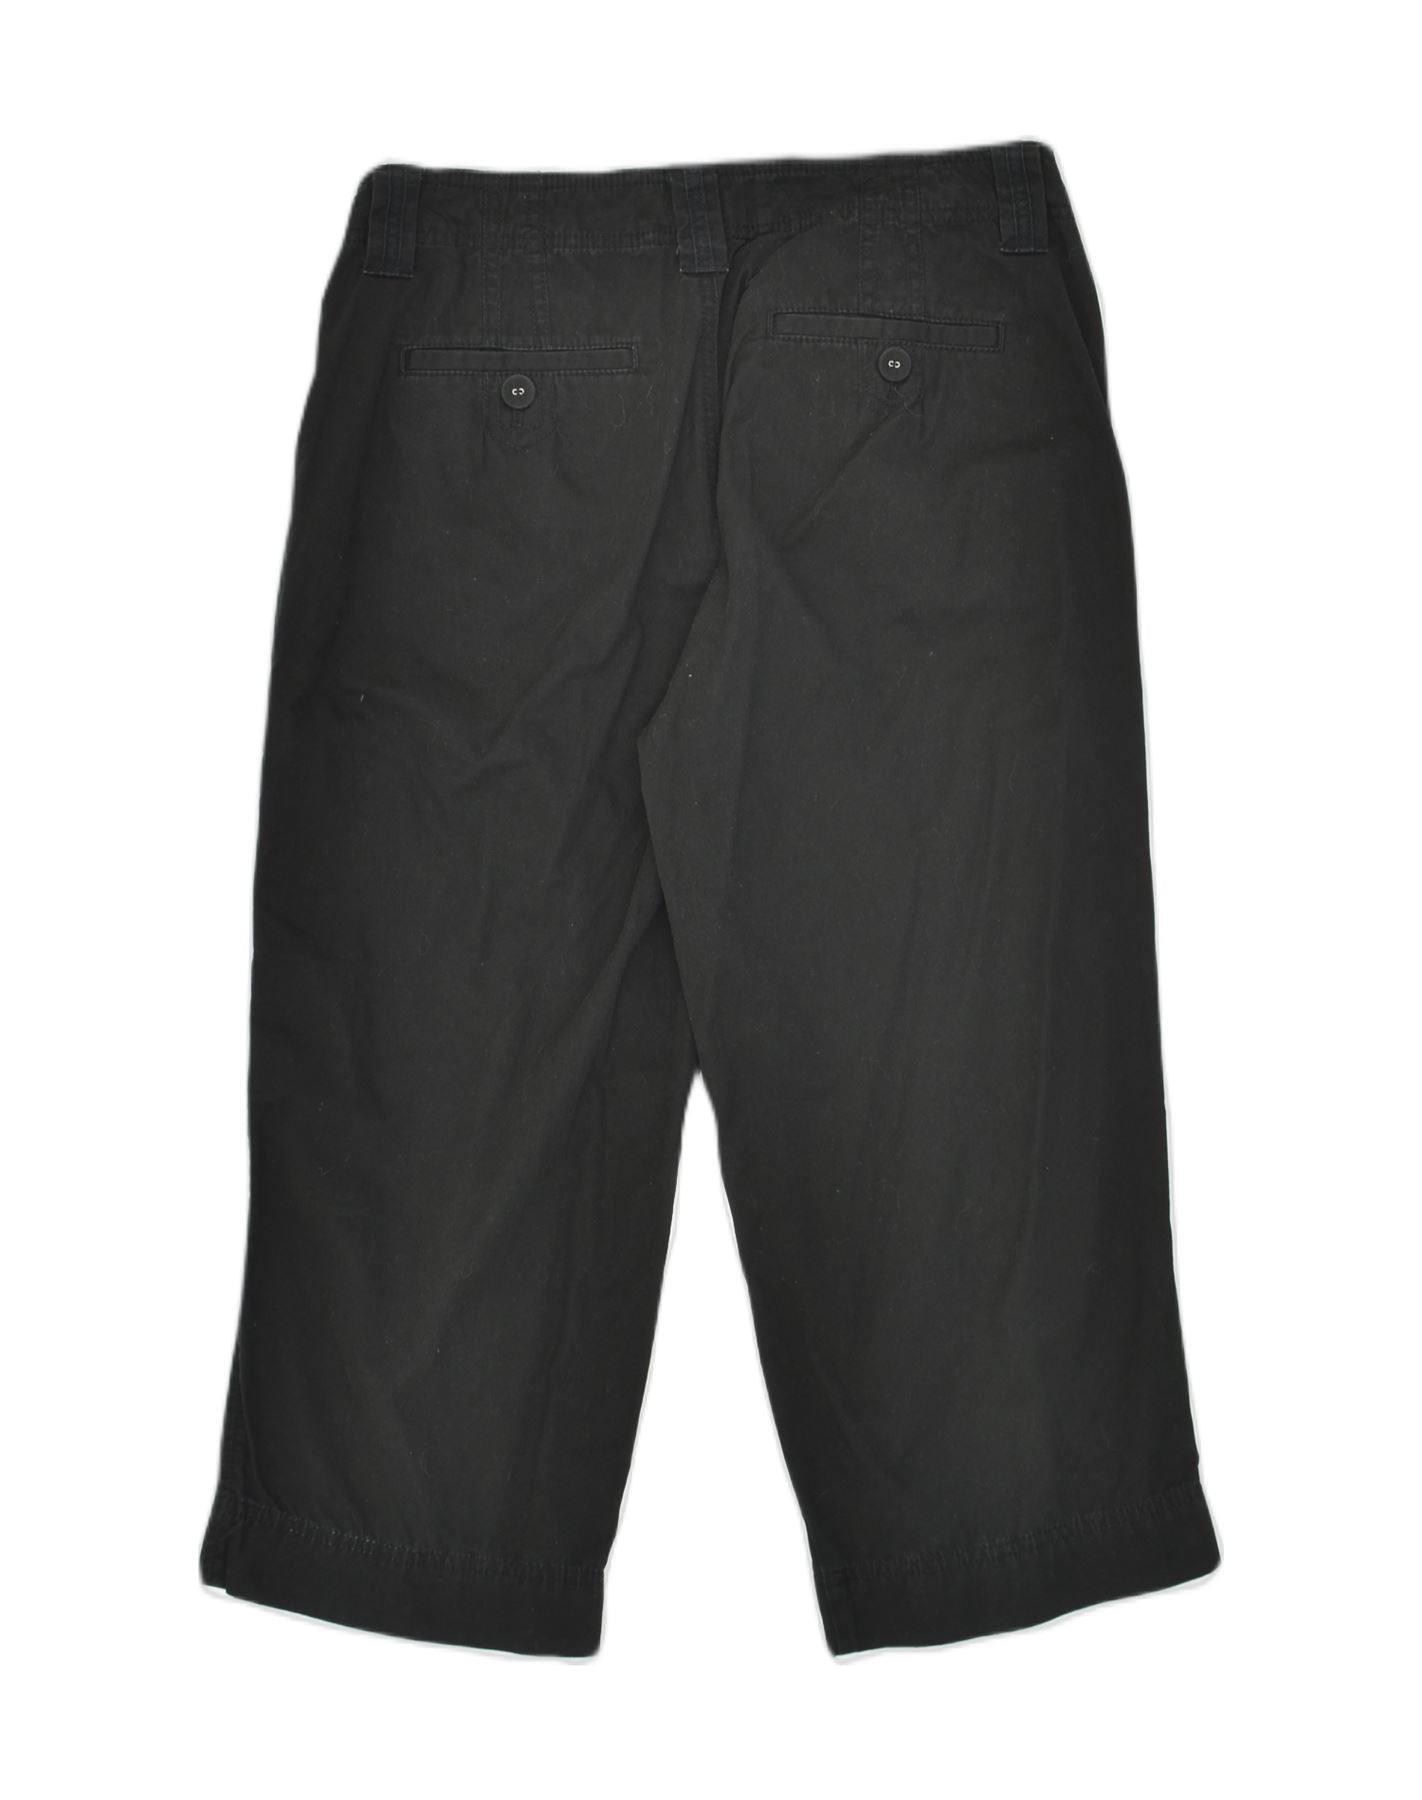 EDDIE BAUER Womens Blakely Fit Capri Trousers US 8 Medium W32 L21 Black, Vintage & Second-Hand Clothing Online